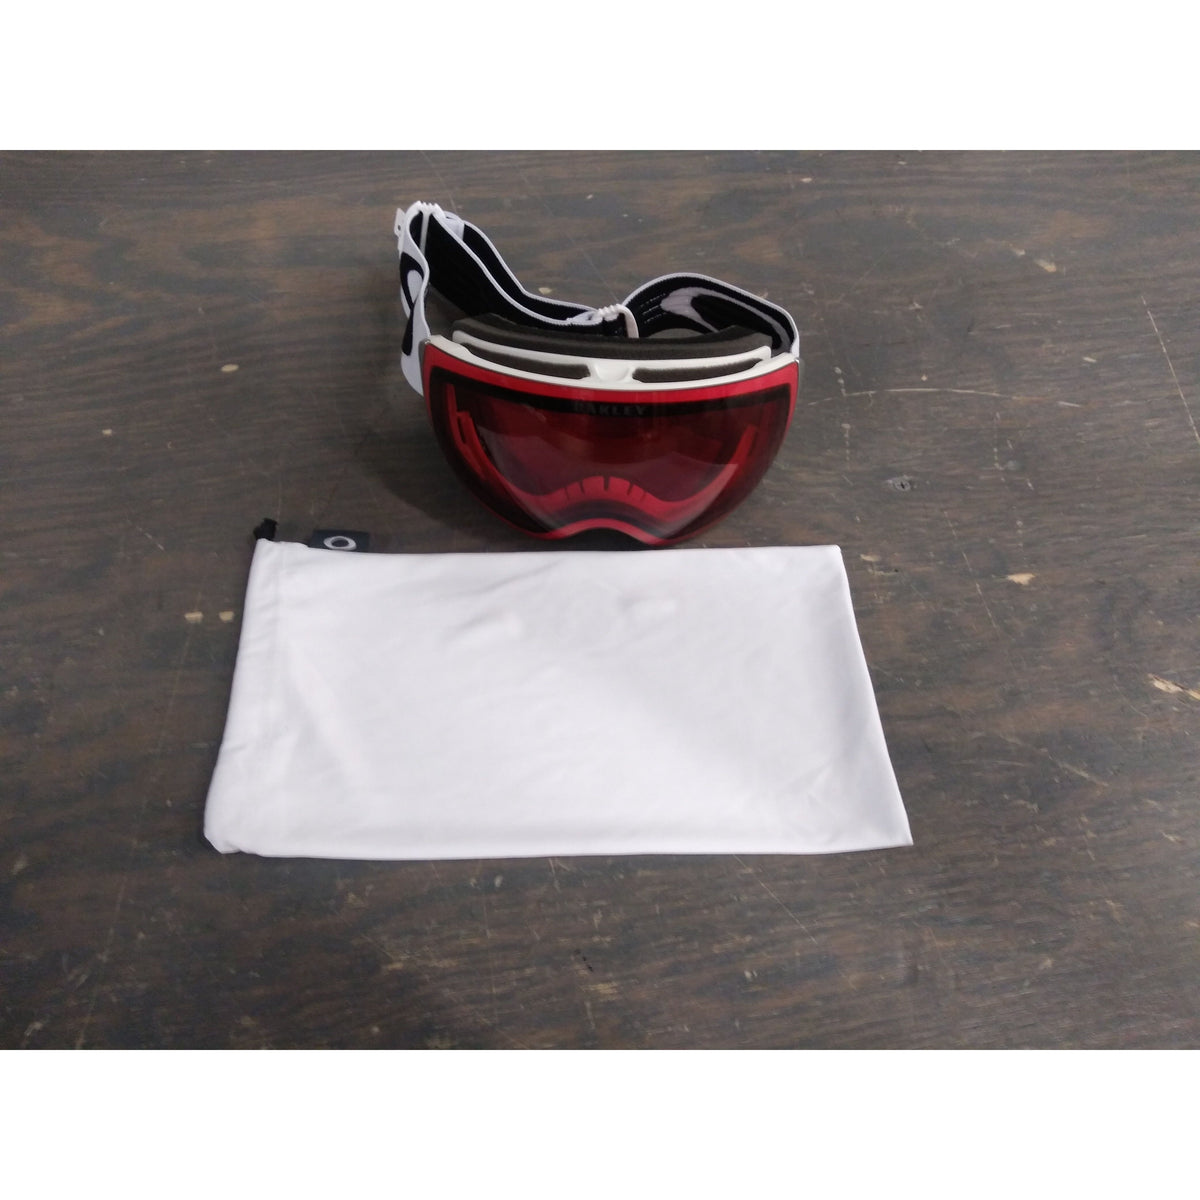 Oakley Flight Deck XM Goggles-Matte White; Prizm Rose - Used - Acceptable